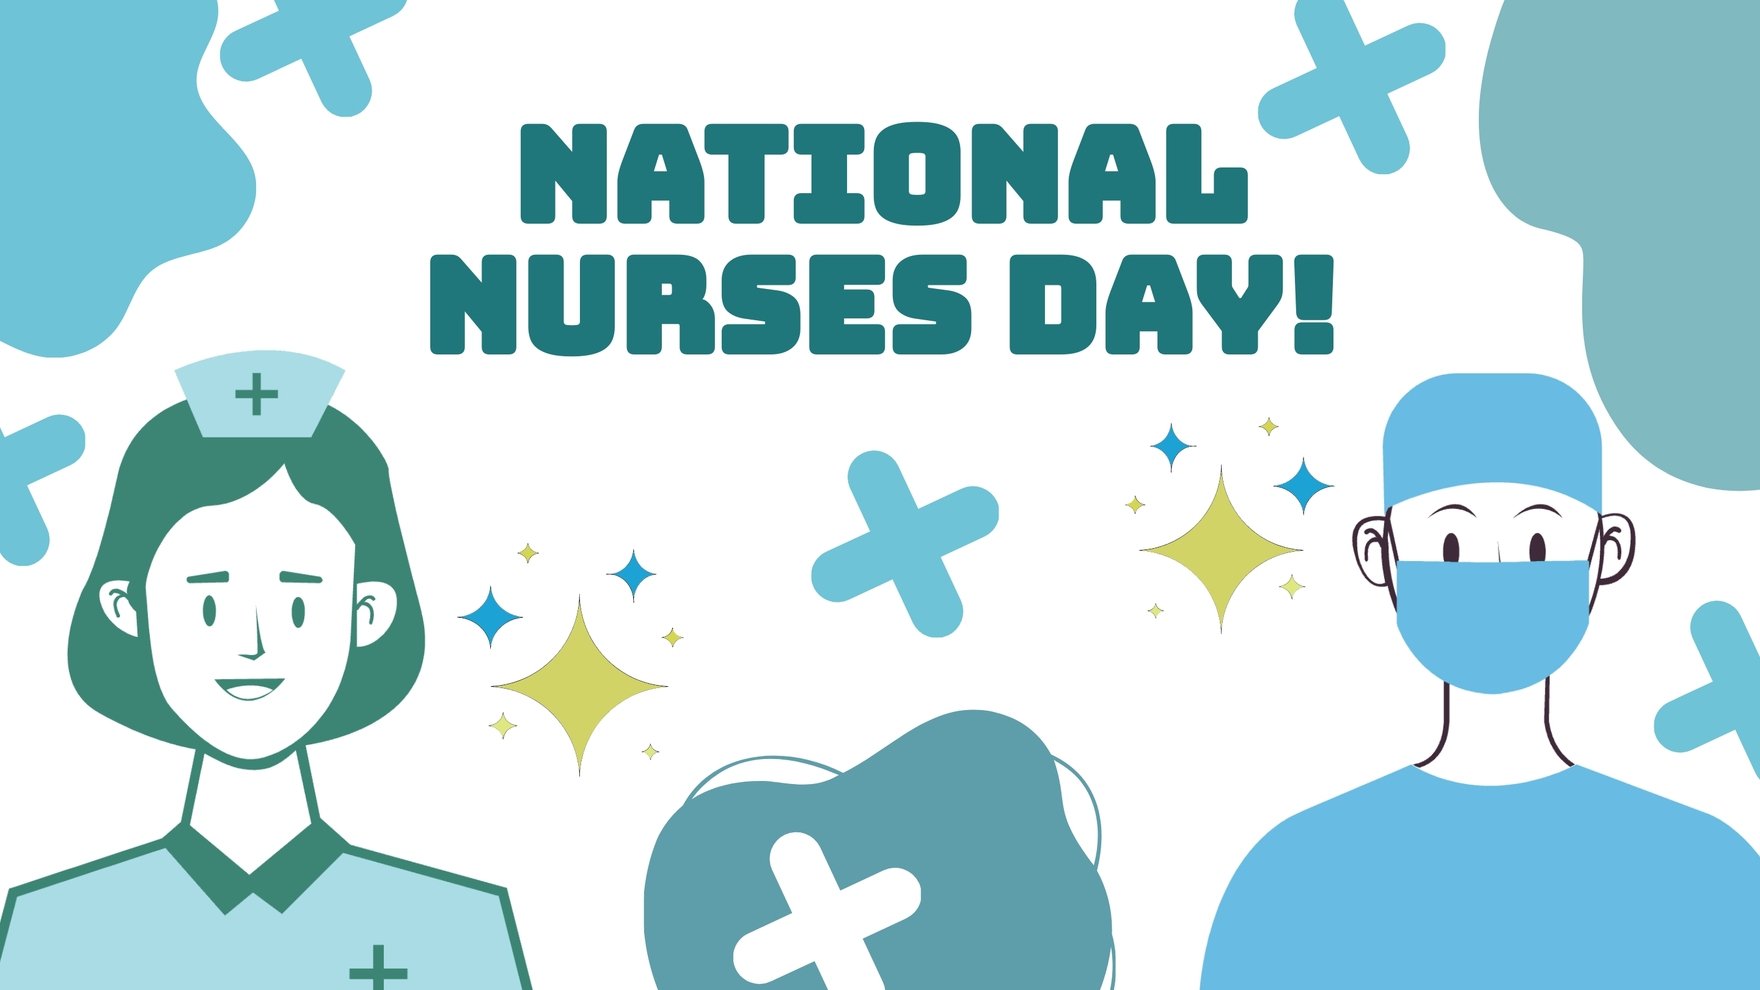 Free National Nurses Day Vector Background in PDF, Illustrator, PSD, EPS, SVG, JPG, PNG